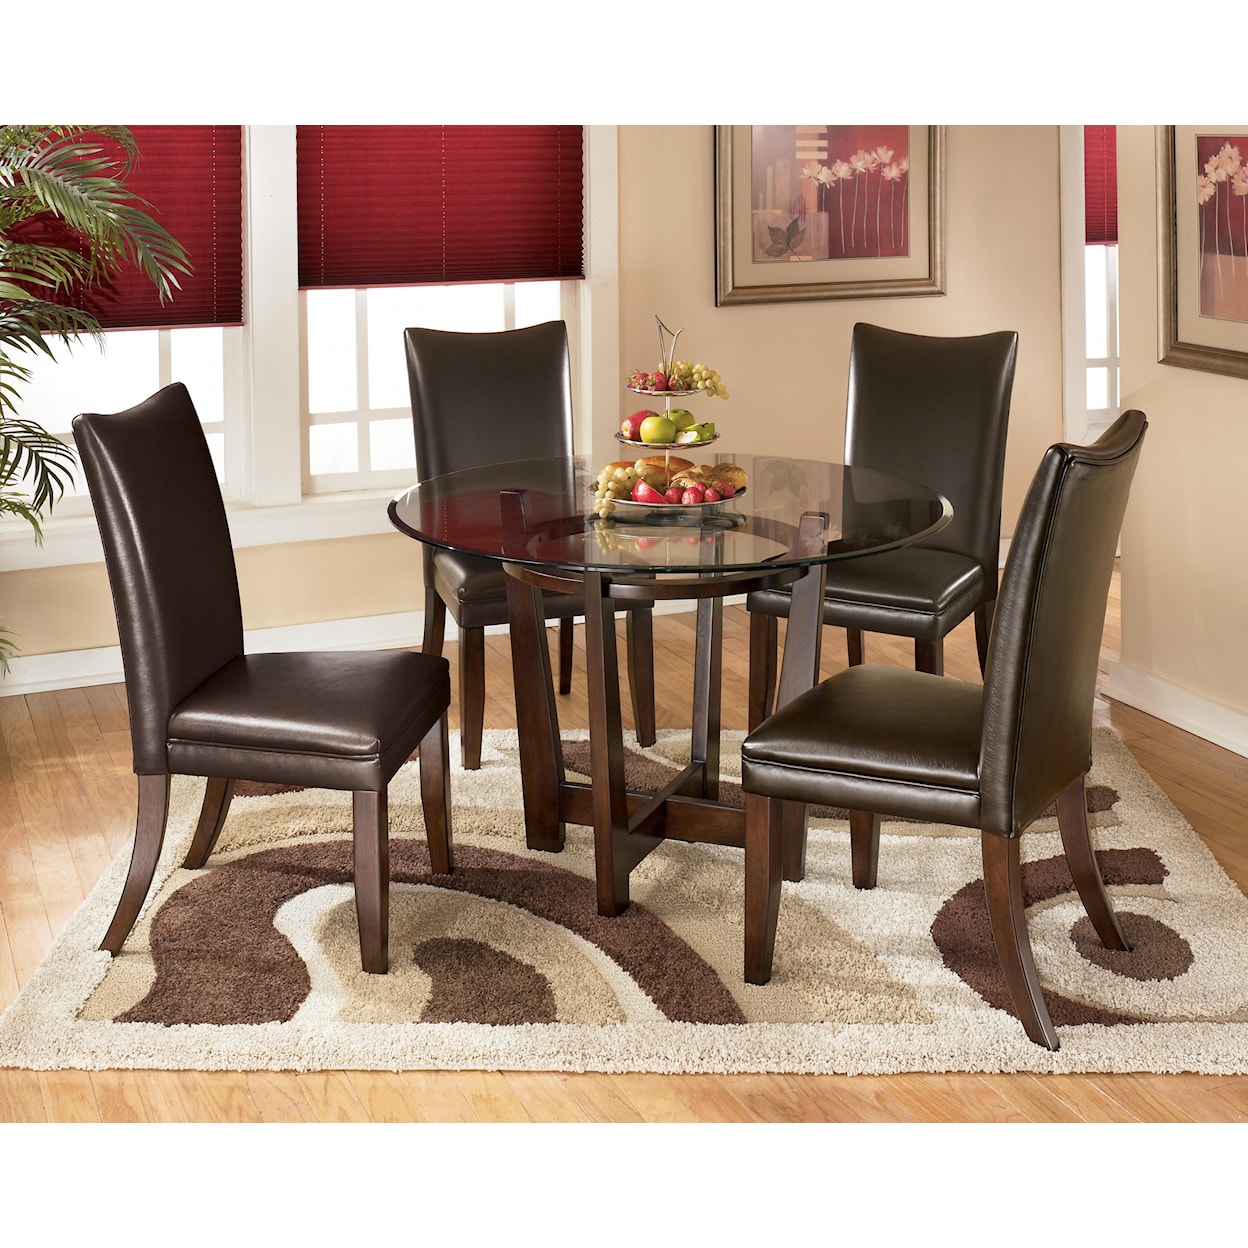 Ashley Furniture Signature Design Charrell 5 Piece Round Dining Table Set